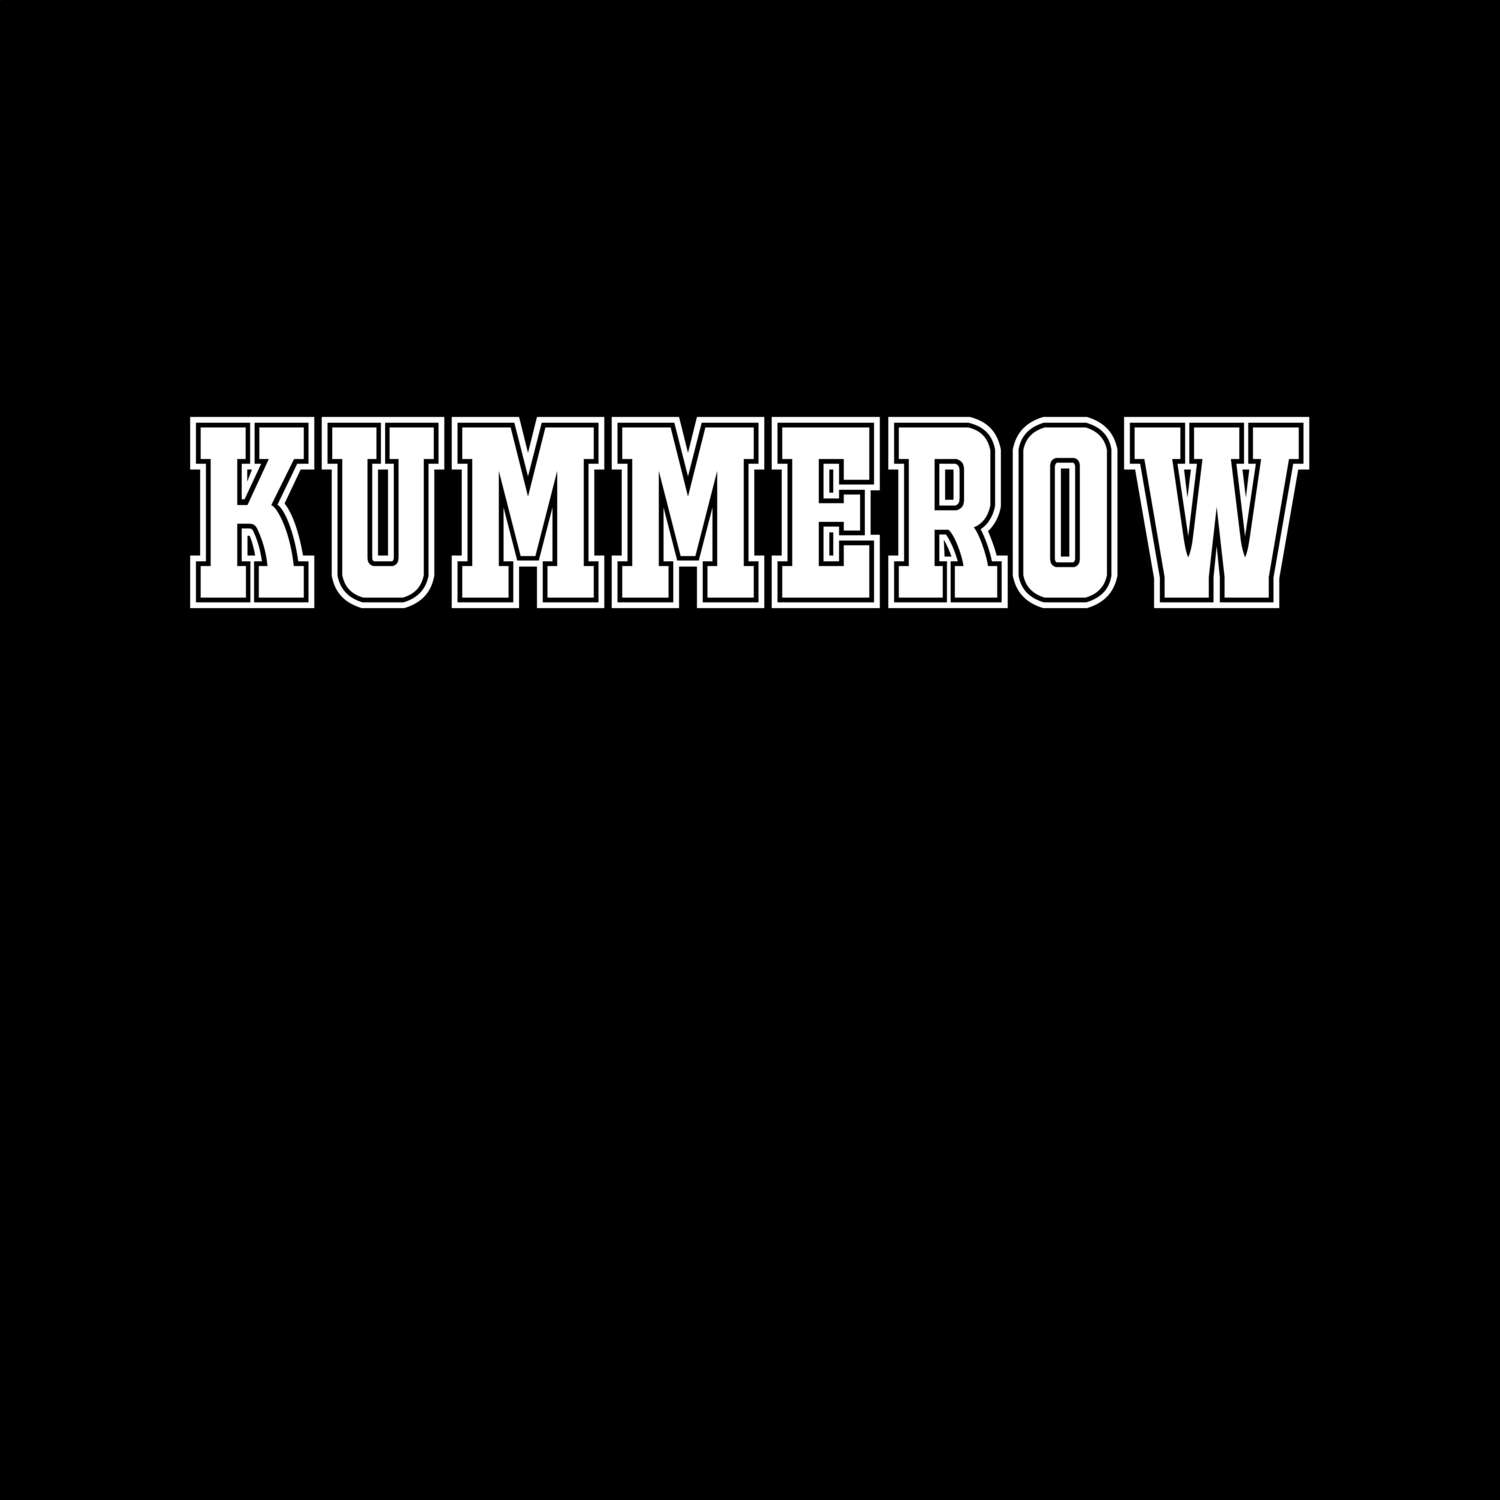 Kummerow T-Shirt »Classic«